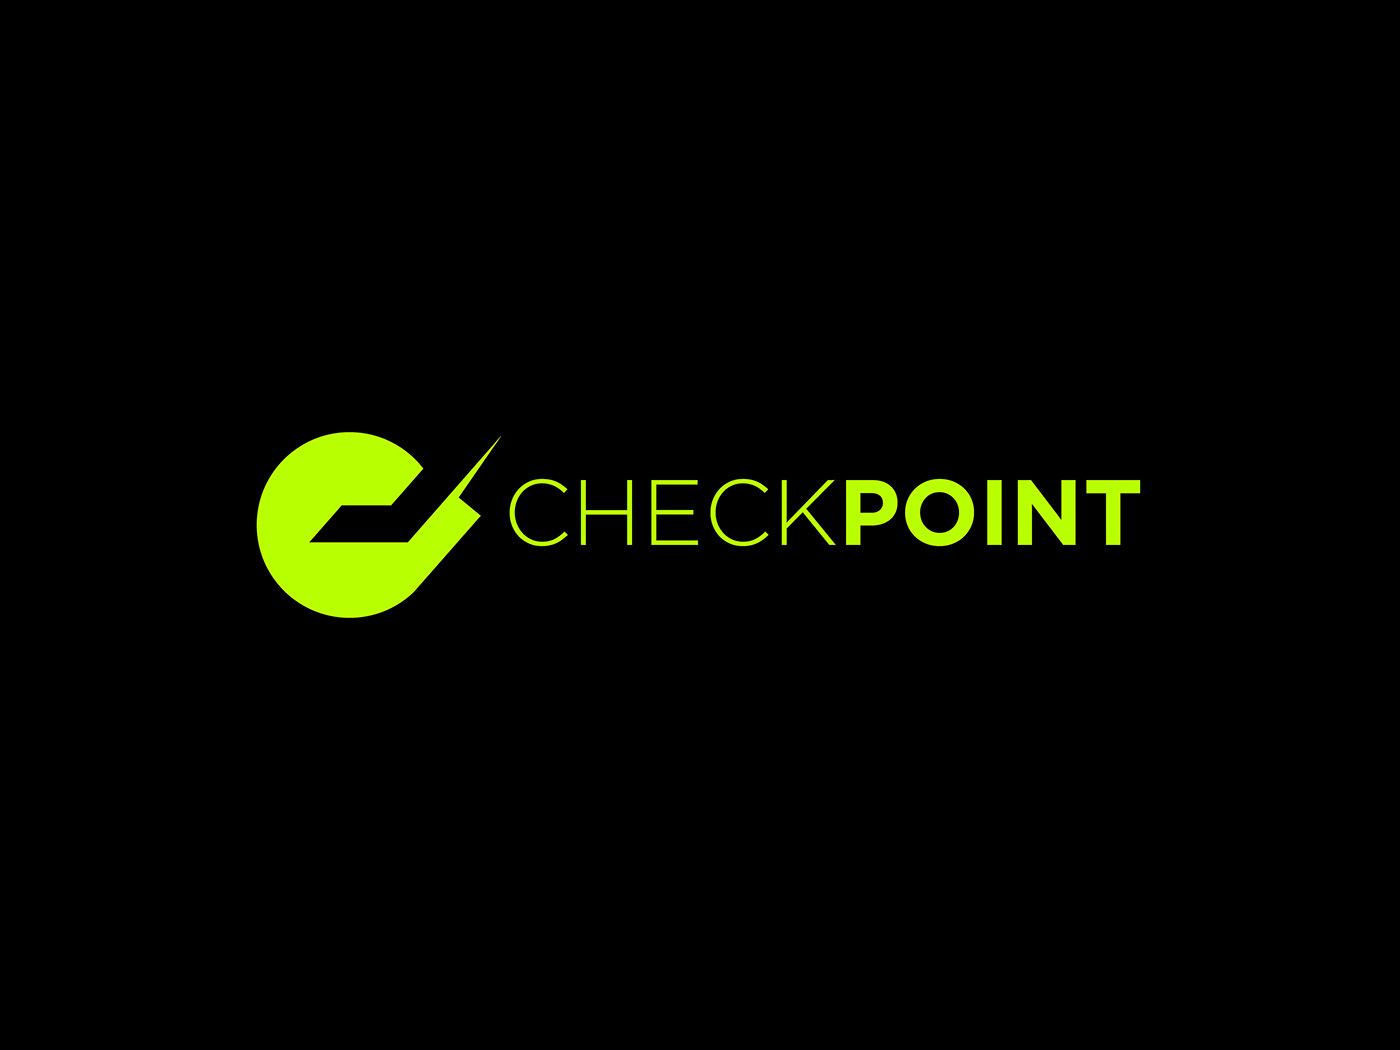 C logo C letter logo checkmark logo location logo logo Logo Design brand identity Graphic Designer checkpoint logo location mark logo